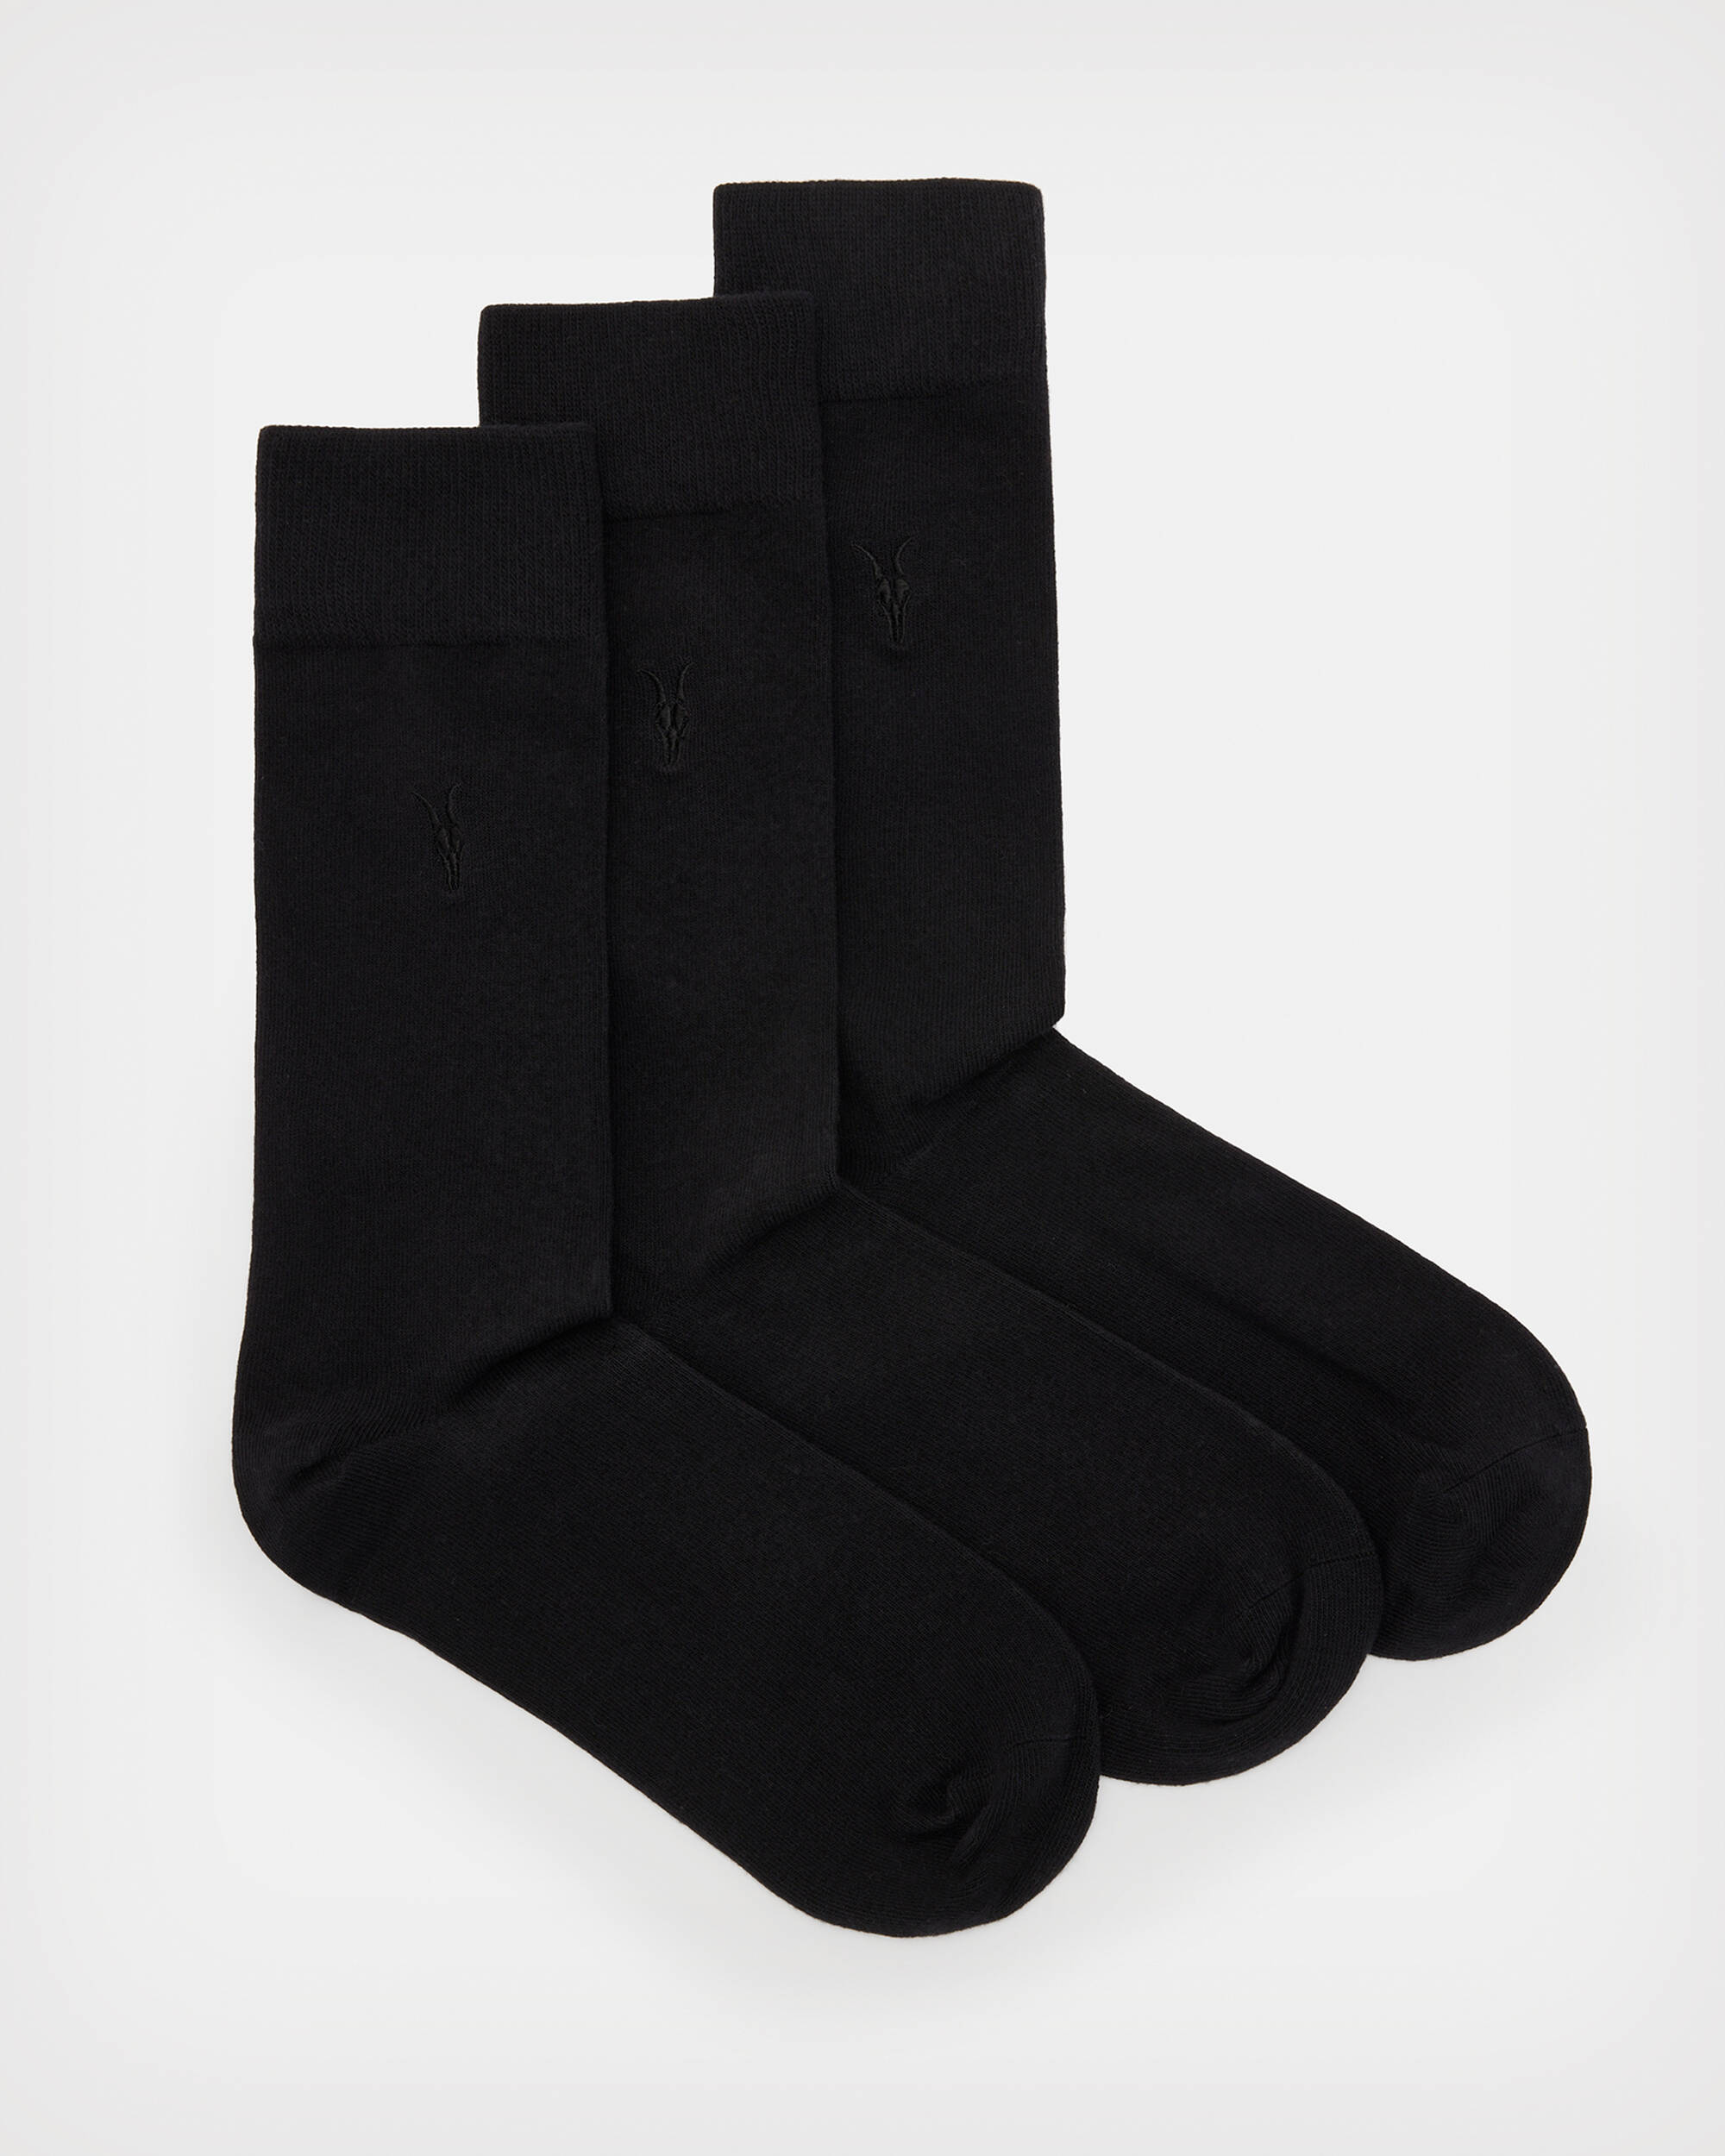 Adan Ramskull Socks 3 Pack BLACK/BLACK/BLACK | ALLSAINTS US